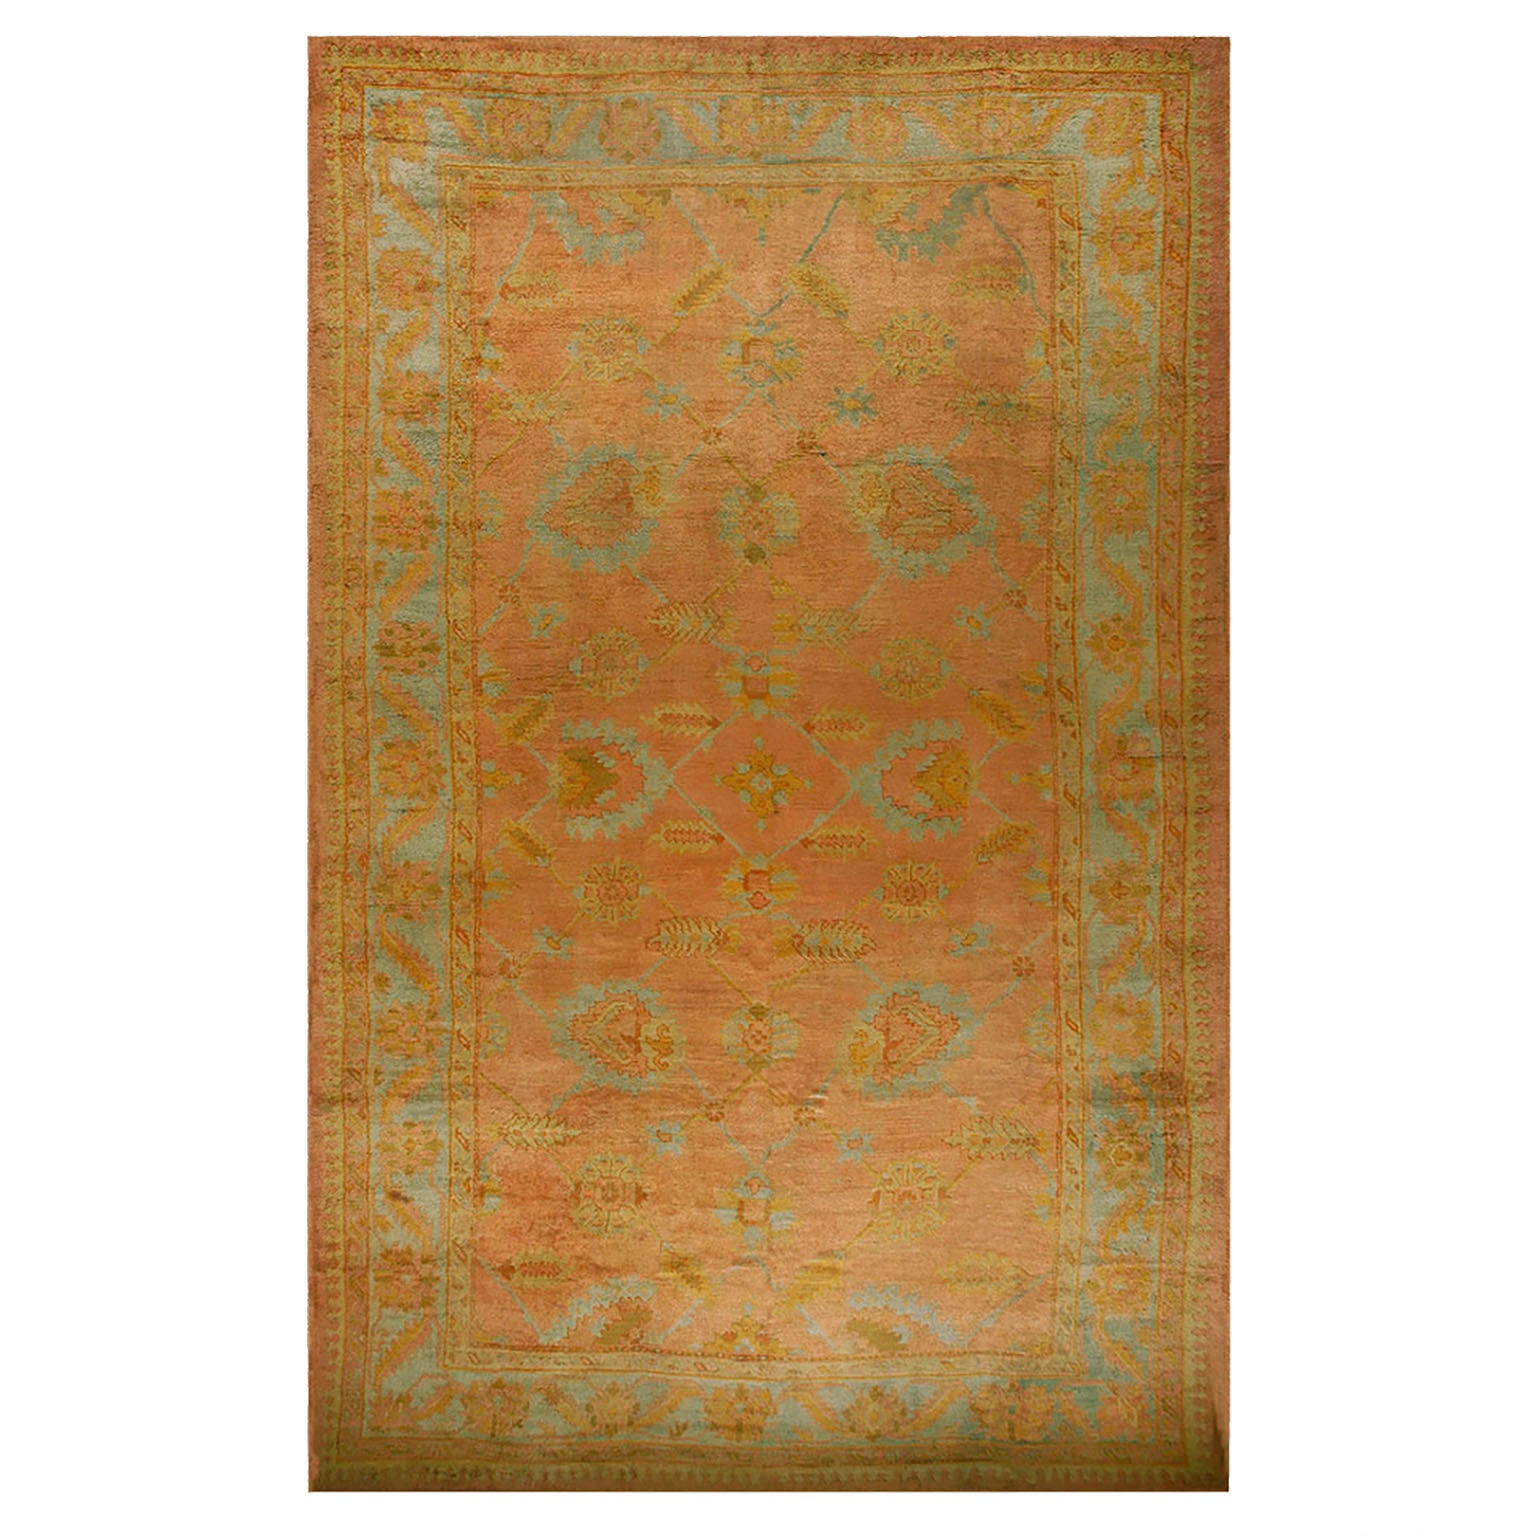 19th Century Turkish Oushak Carpet ( 11'2" x 18''6" - 340 x 564 ) For Sale